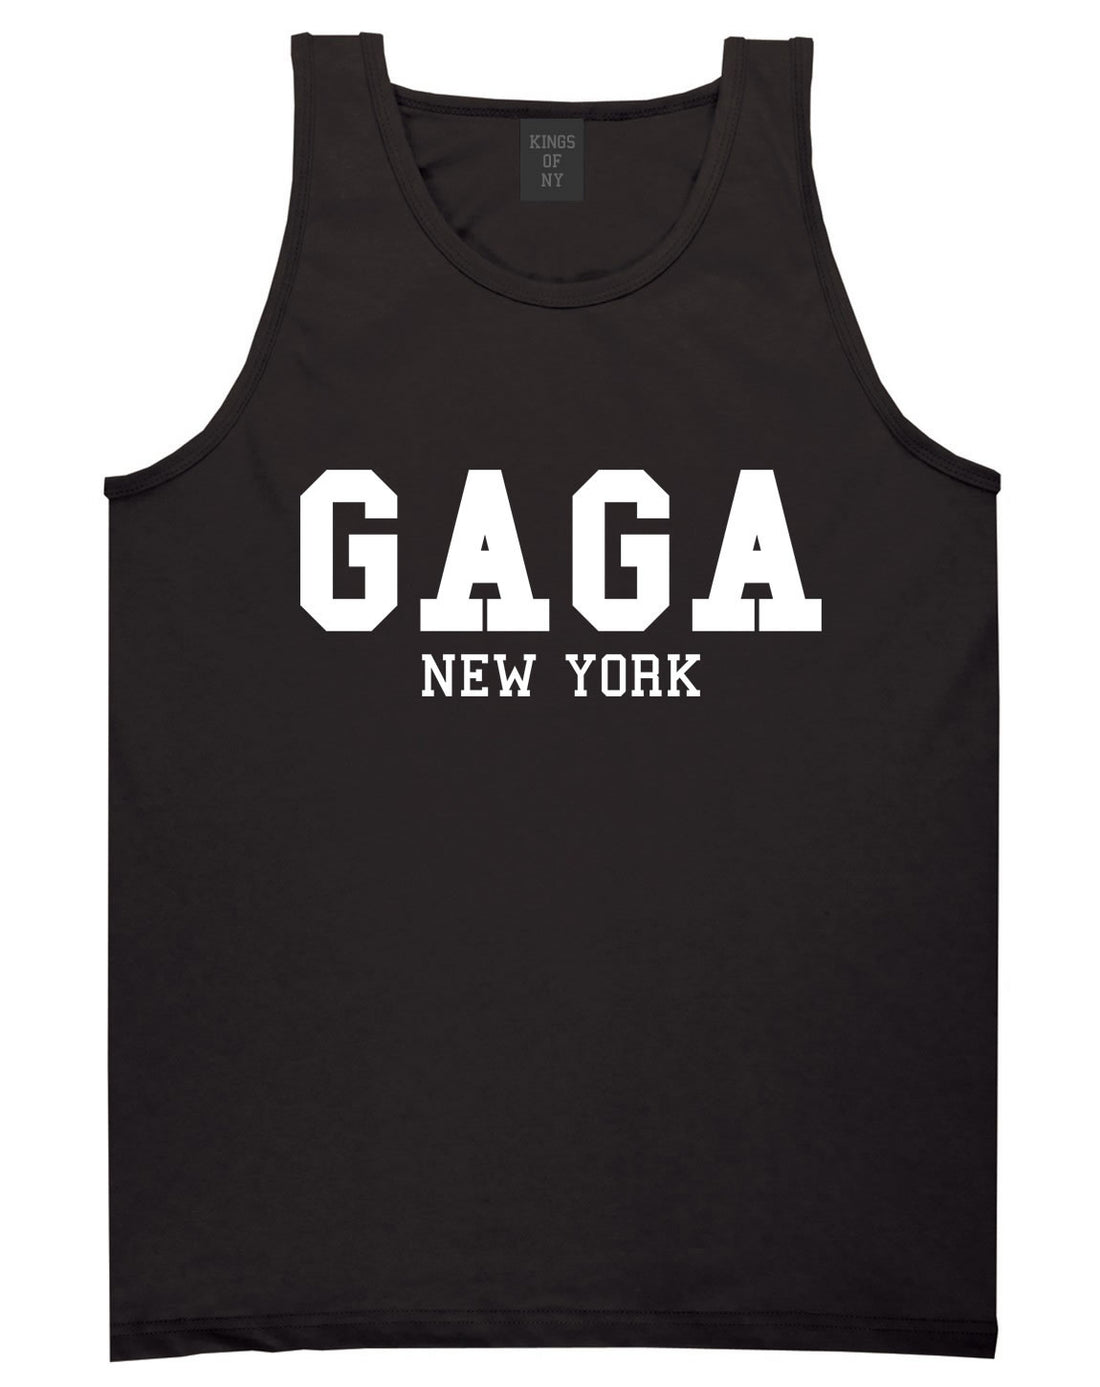 Gaga New York Tank Top in Black by Kings Of NY